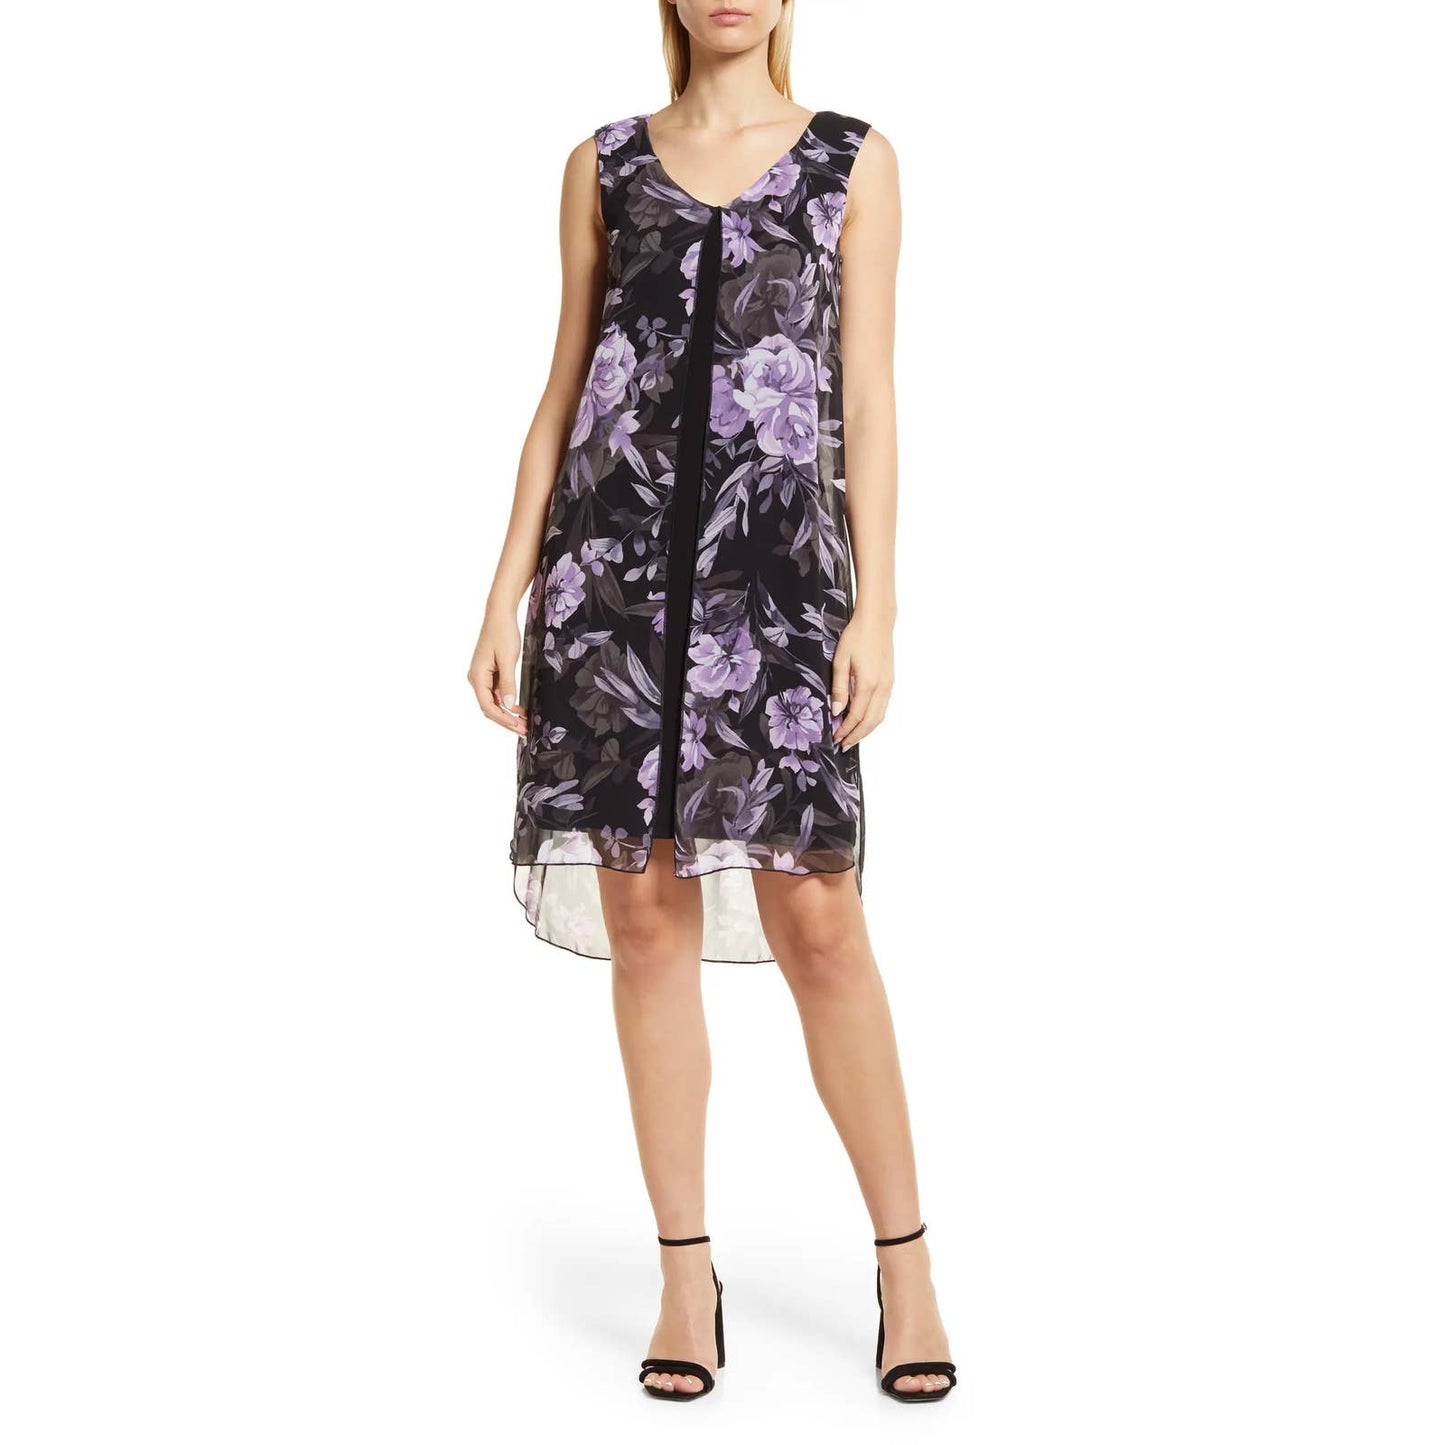 CONNECTED APPAREL Women's Grape Floral-Print Sleeveless Chiffon Overlay Dress